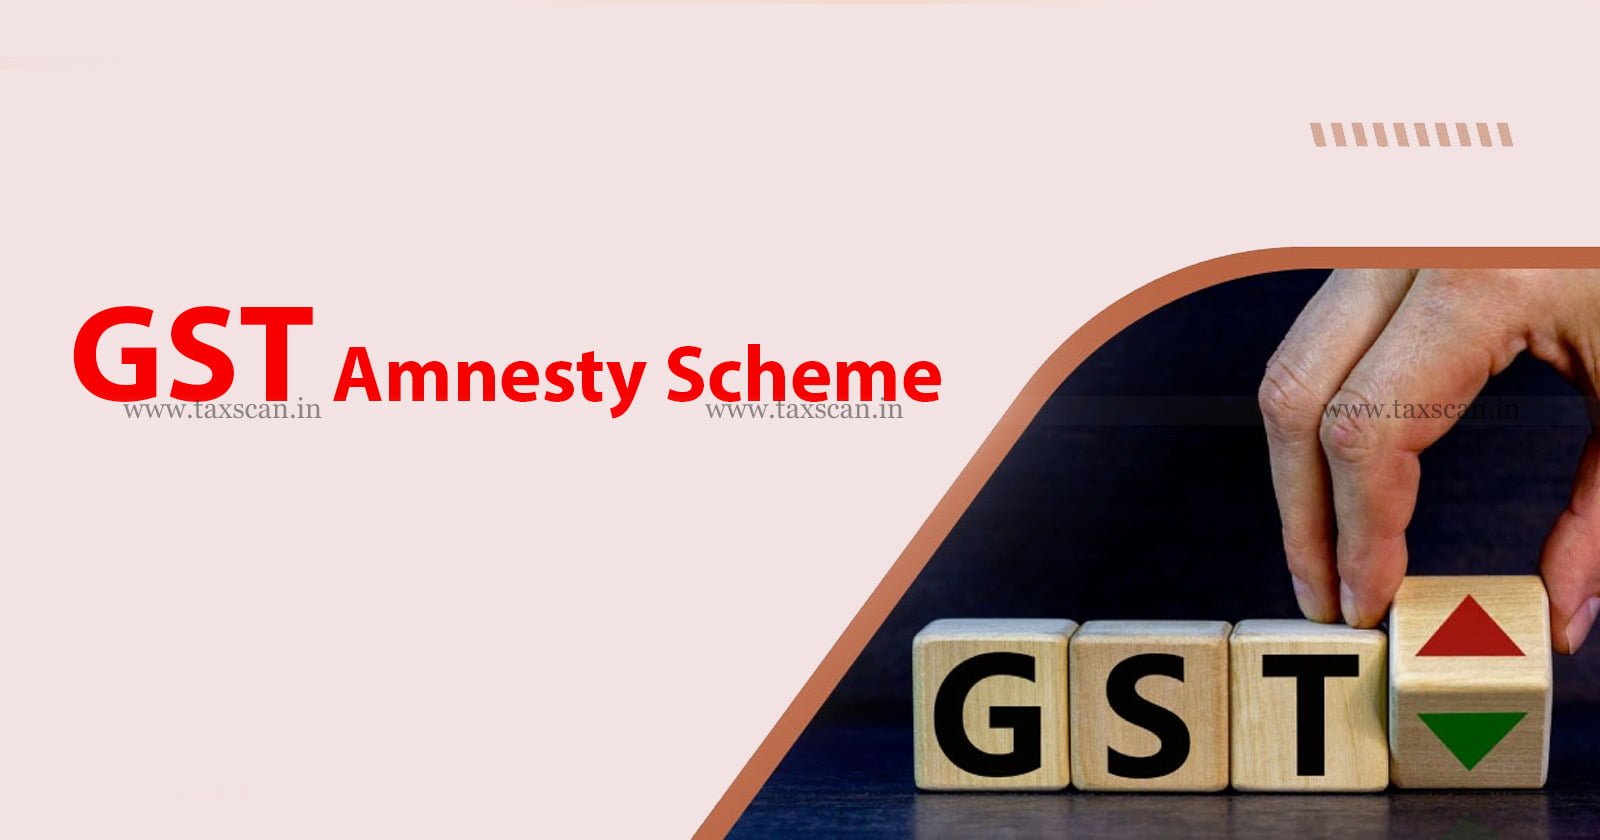 Central Govt Extends due date of Amnesty Schemes - Central Govt Extends due date - Central Govt - due date - Amnesty Schemes - non-filers of GSTR-4 - GSTR-4 - GSTR-9 - GSTR-10 - GST - taxscan